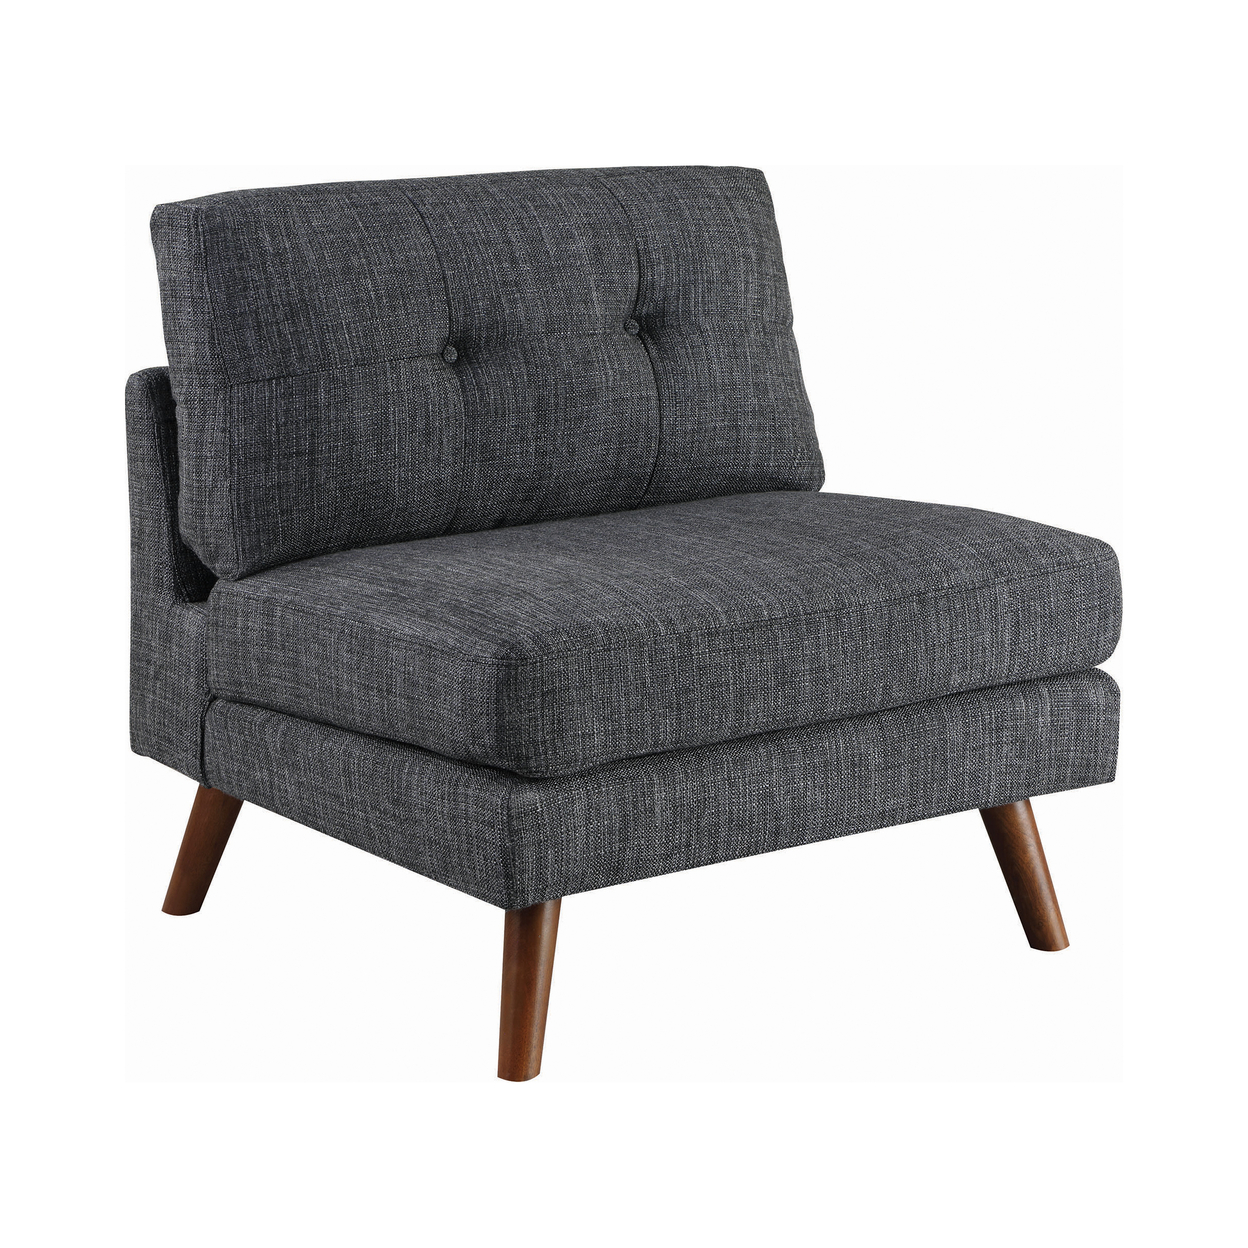 Mid Century Style Fabric Armless Chair With Splayed Legs, Dark Gray- Saltoro Sherpi